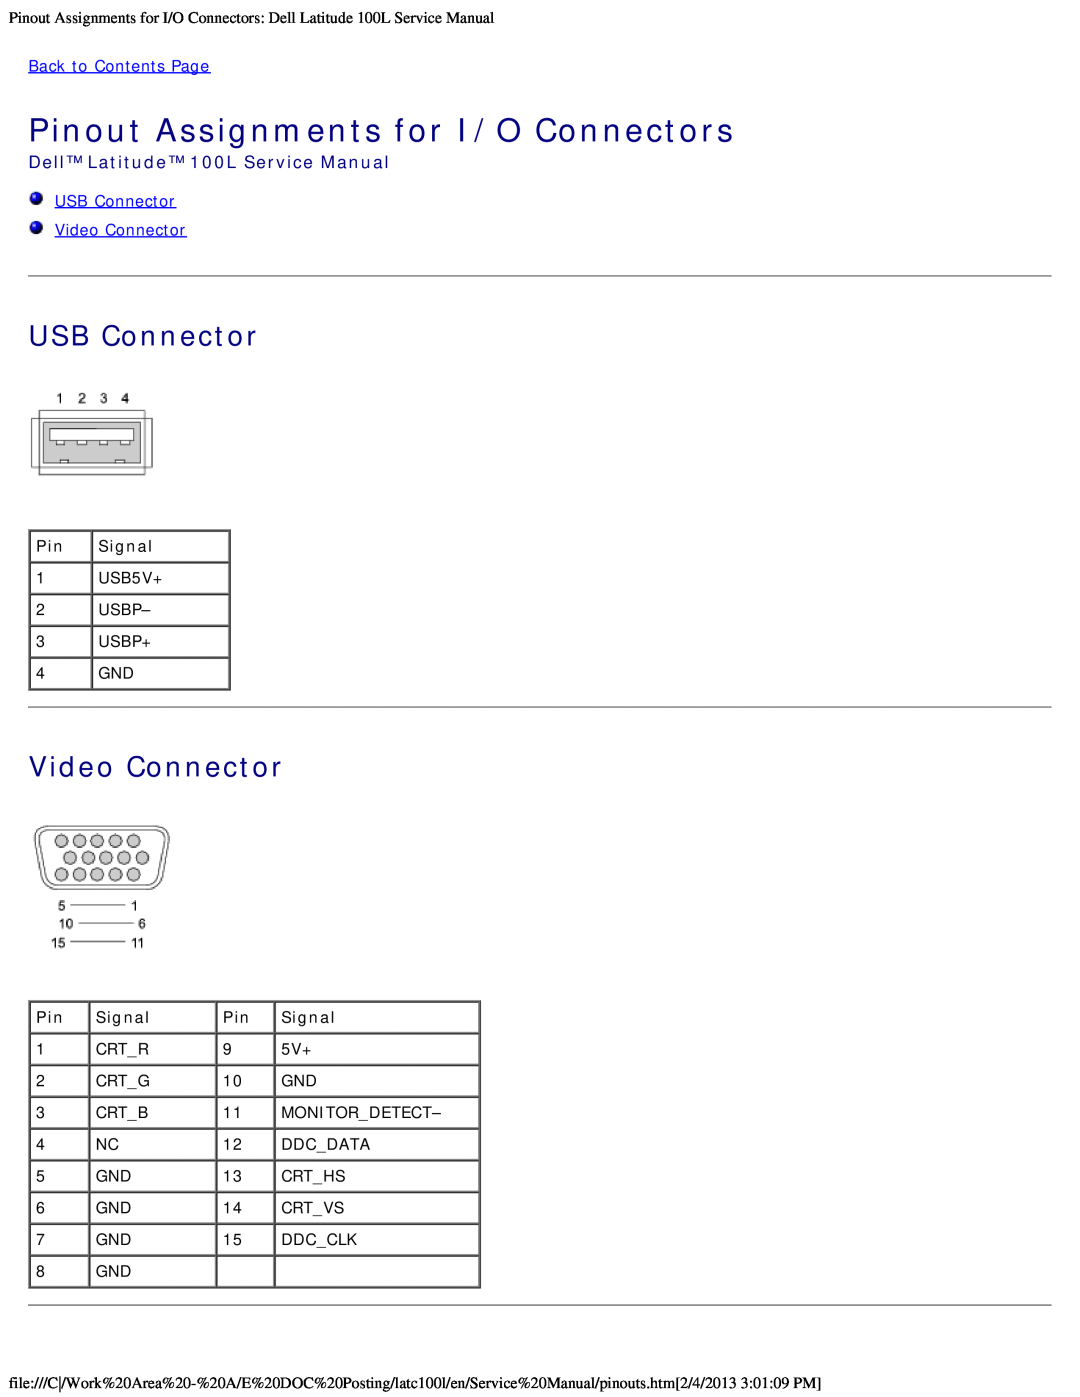 Dell Pinout Assignments for I/O Connectors, USB Connector Video Connector, Dell Latitude 100L Service Manual 